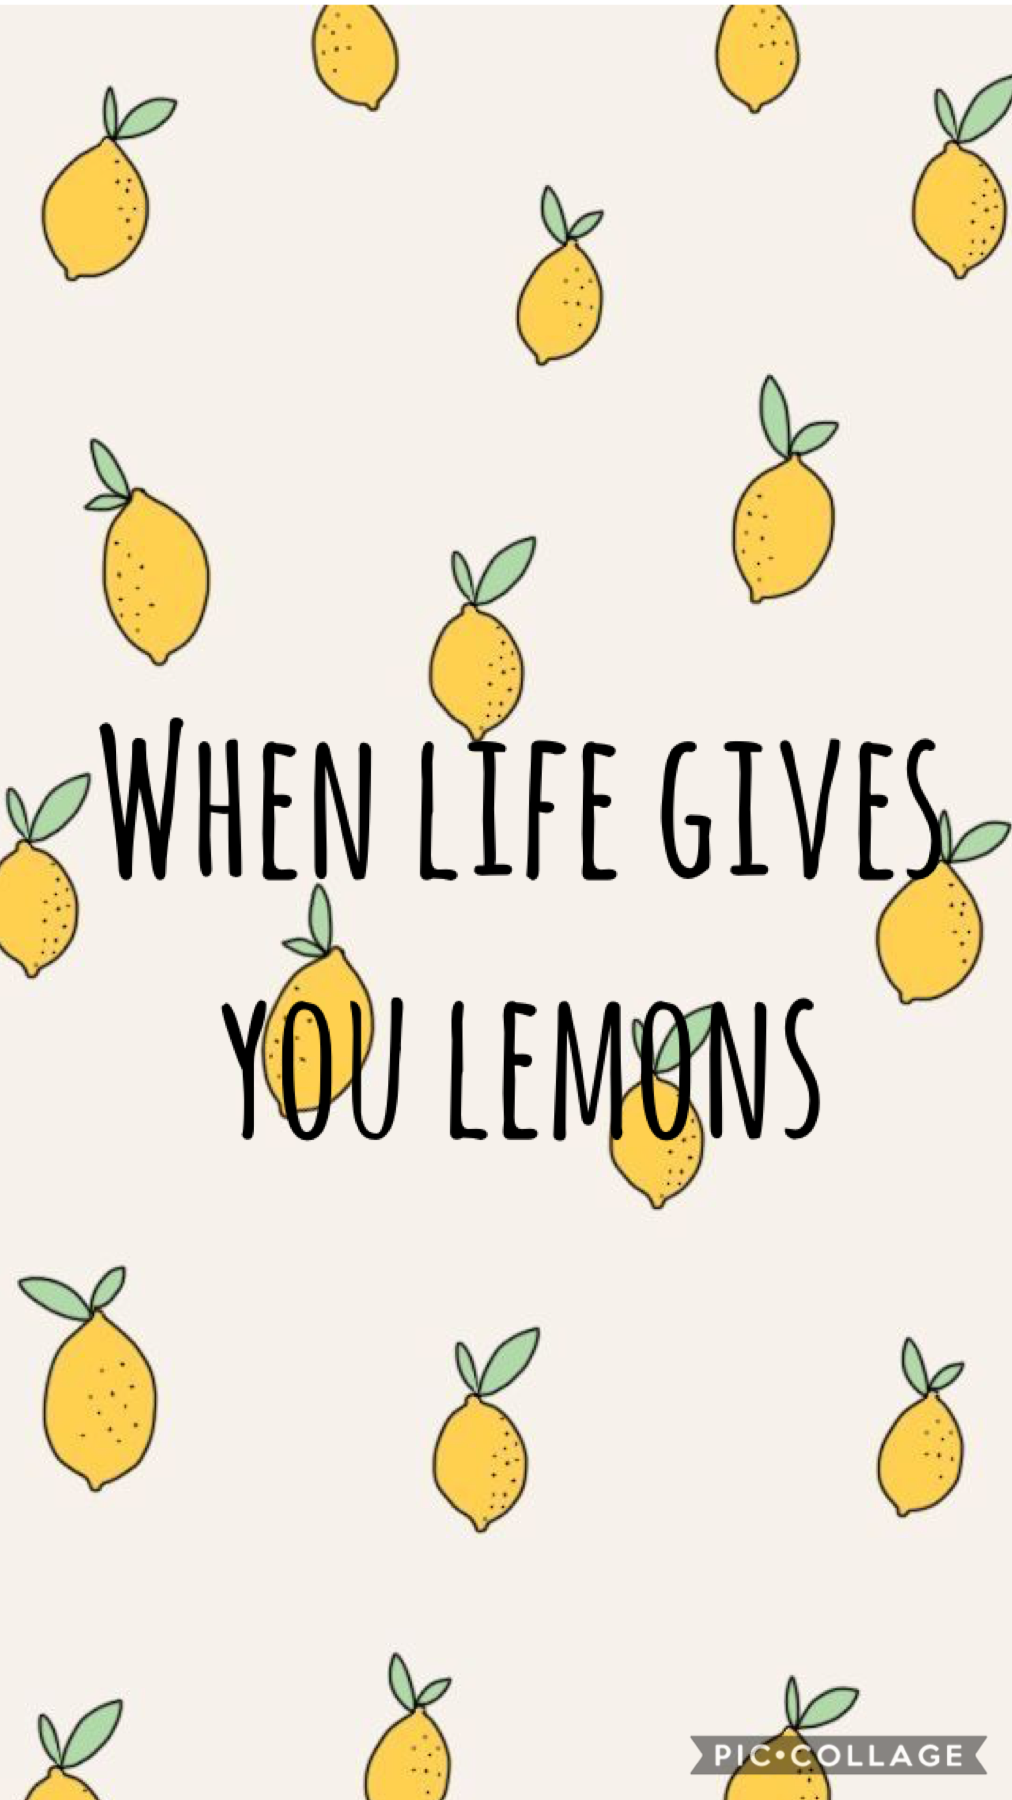 When life gives you lemons <3